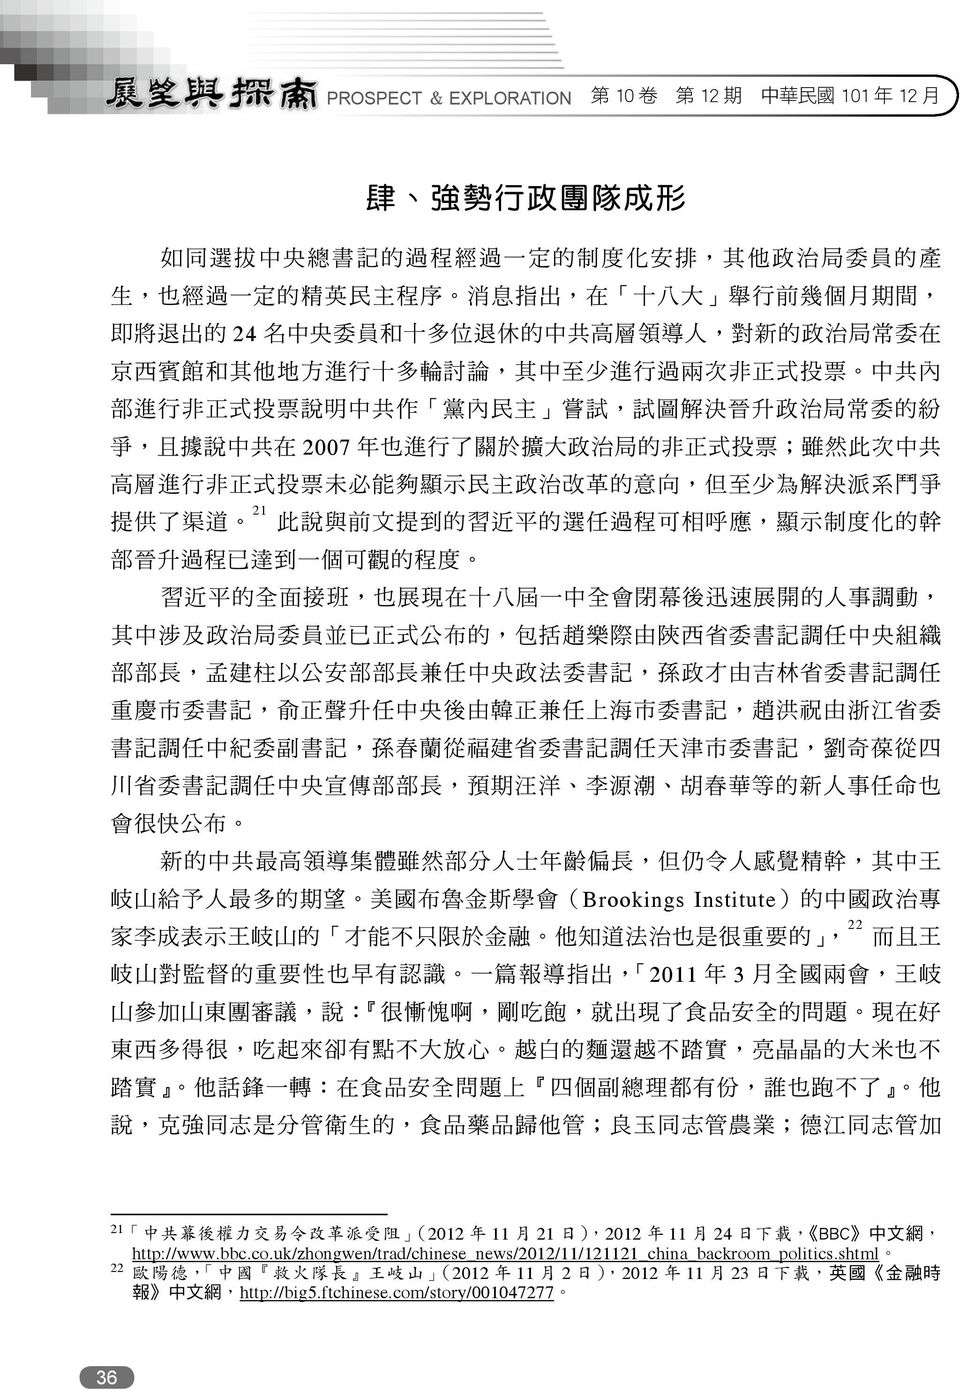 bbc.co.uk/zhongwen/trad/chinese_news/2012/11/121121_china_backroom_politics.